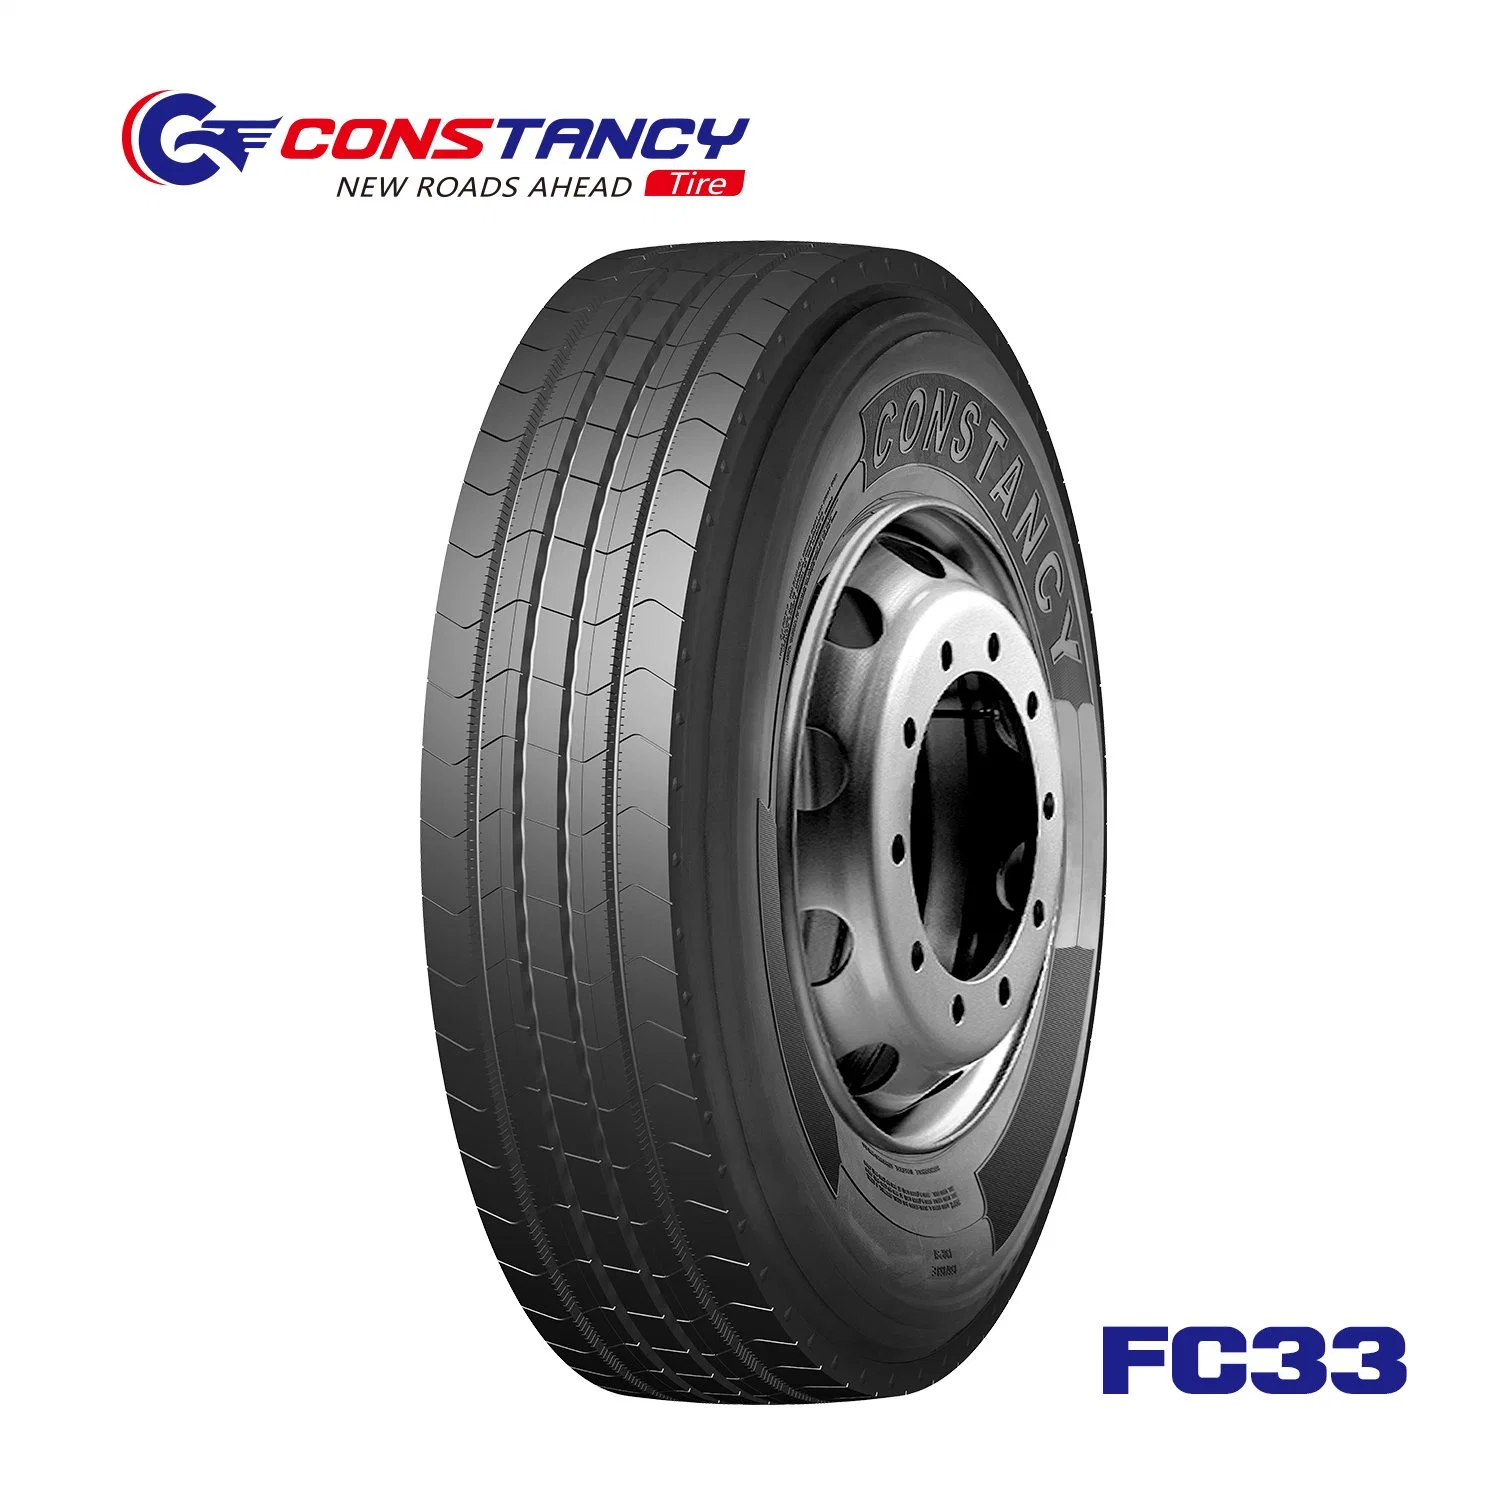 Constancy Truck Tyre, Light Truck, Steer and Trailer Tyre FC33 (235/75r17.5)